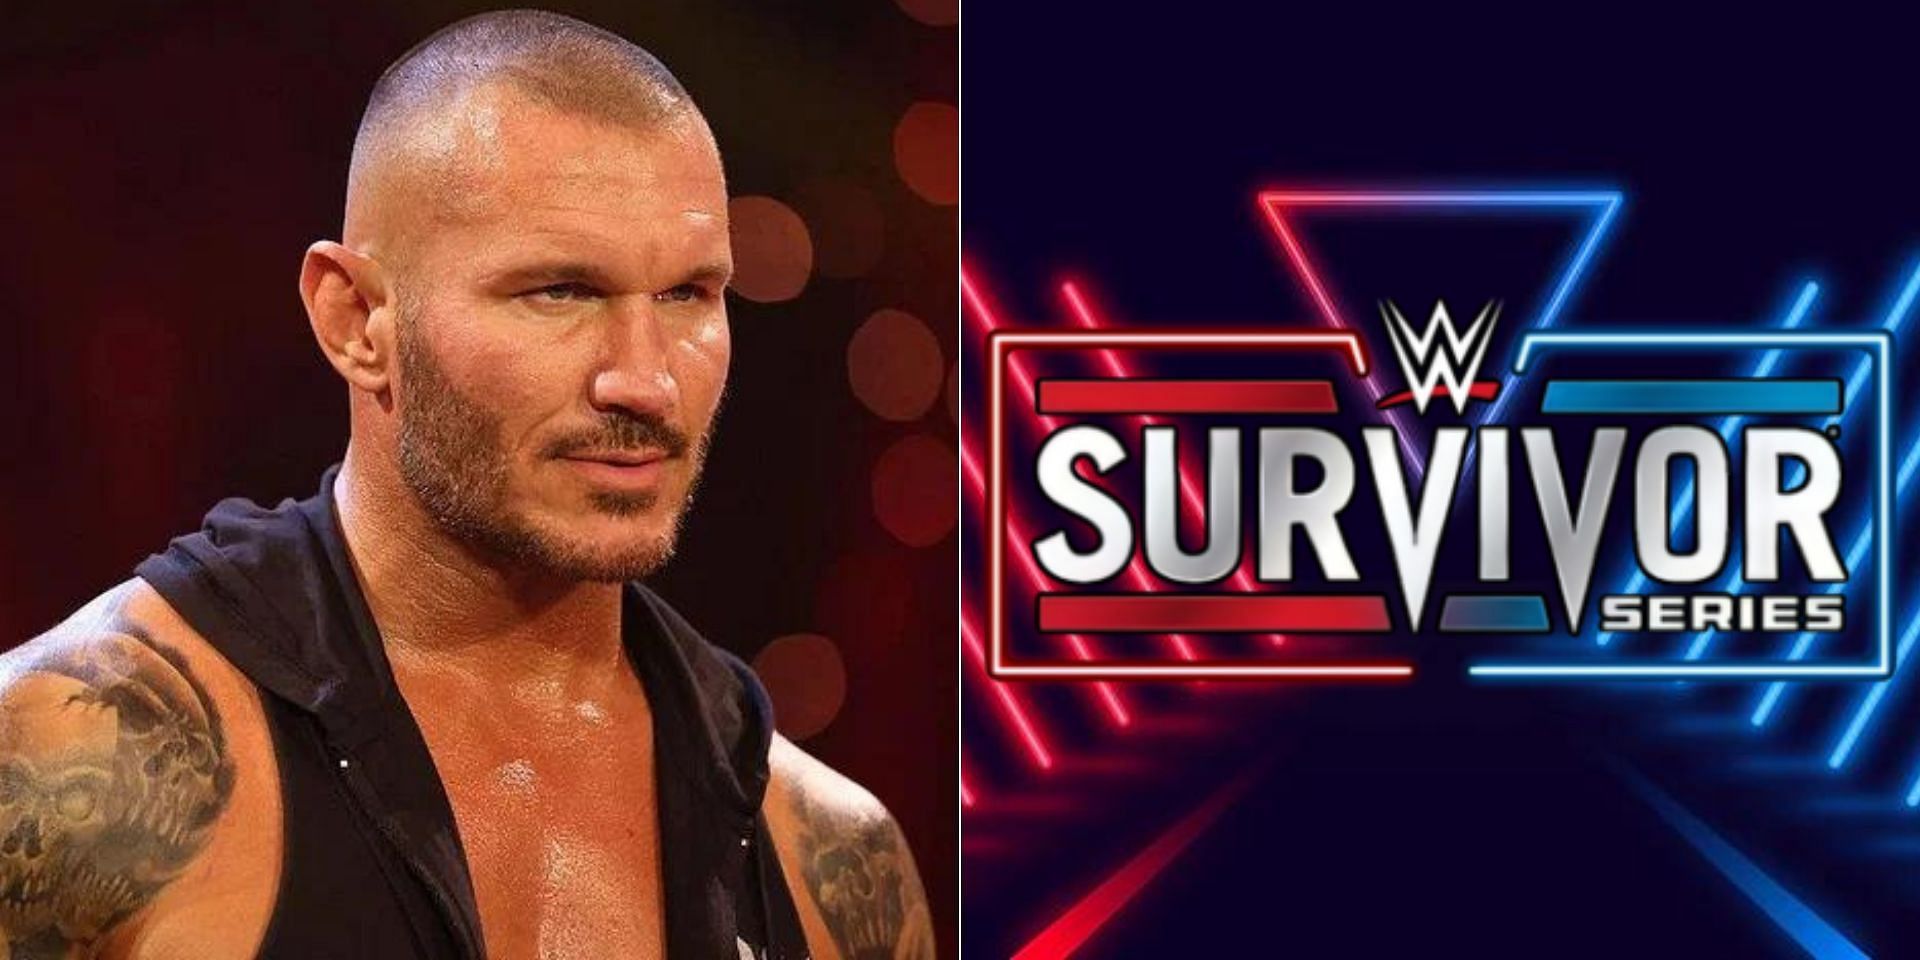 Randy Orton is set to return at WWE Survivor Series